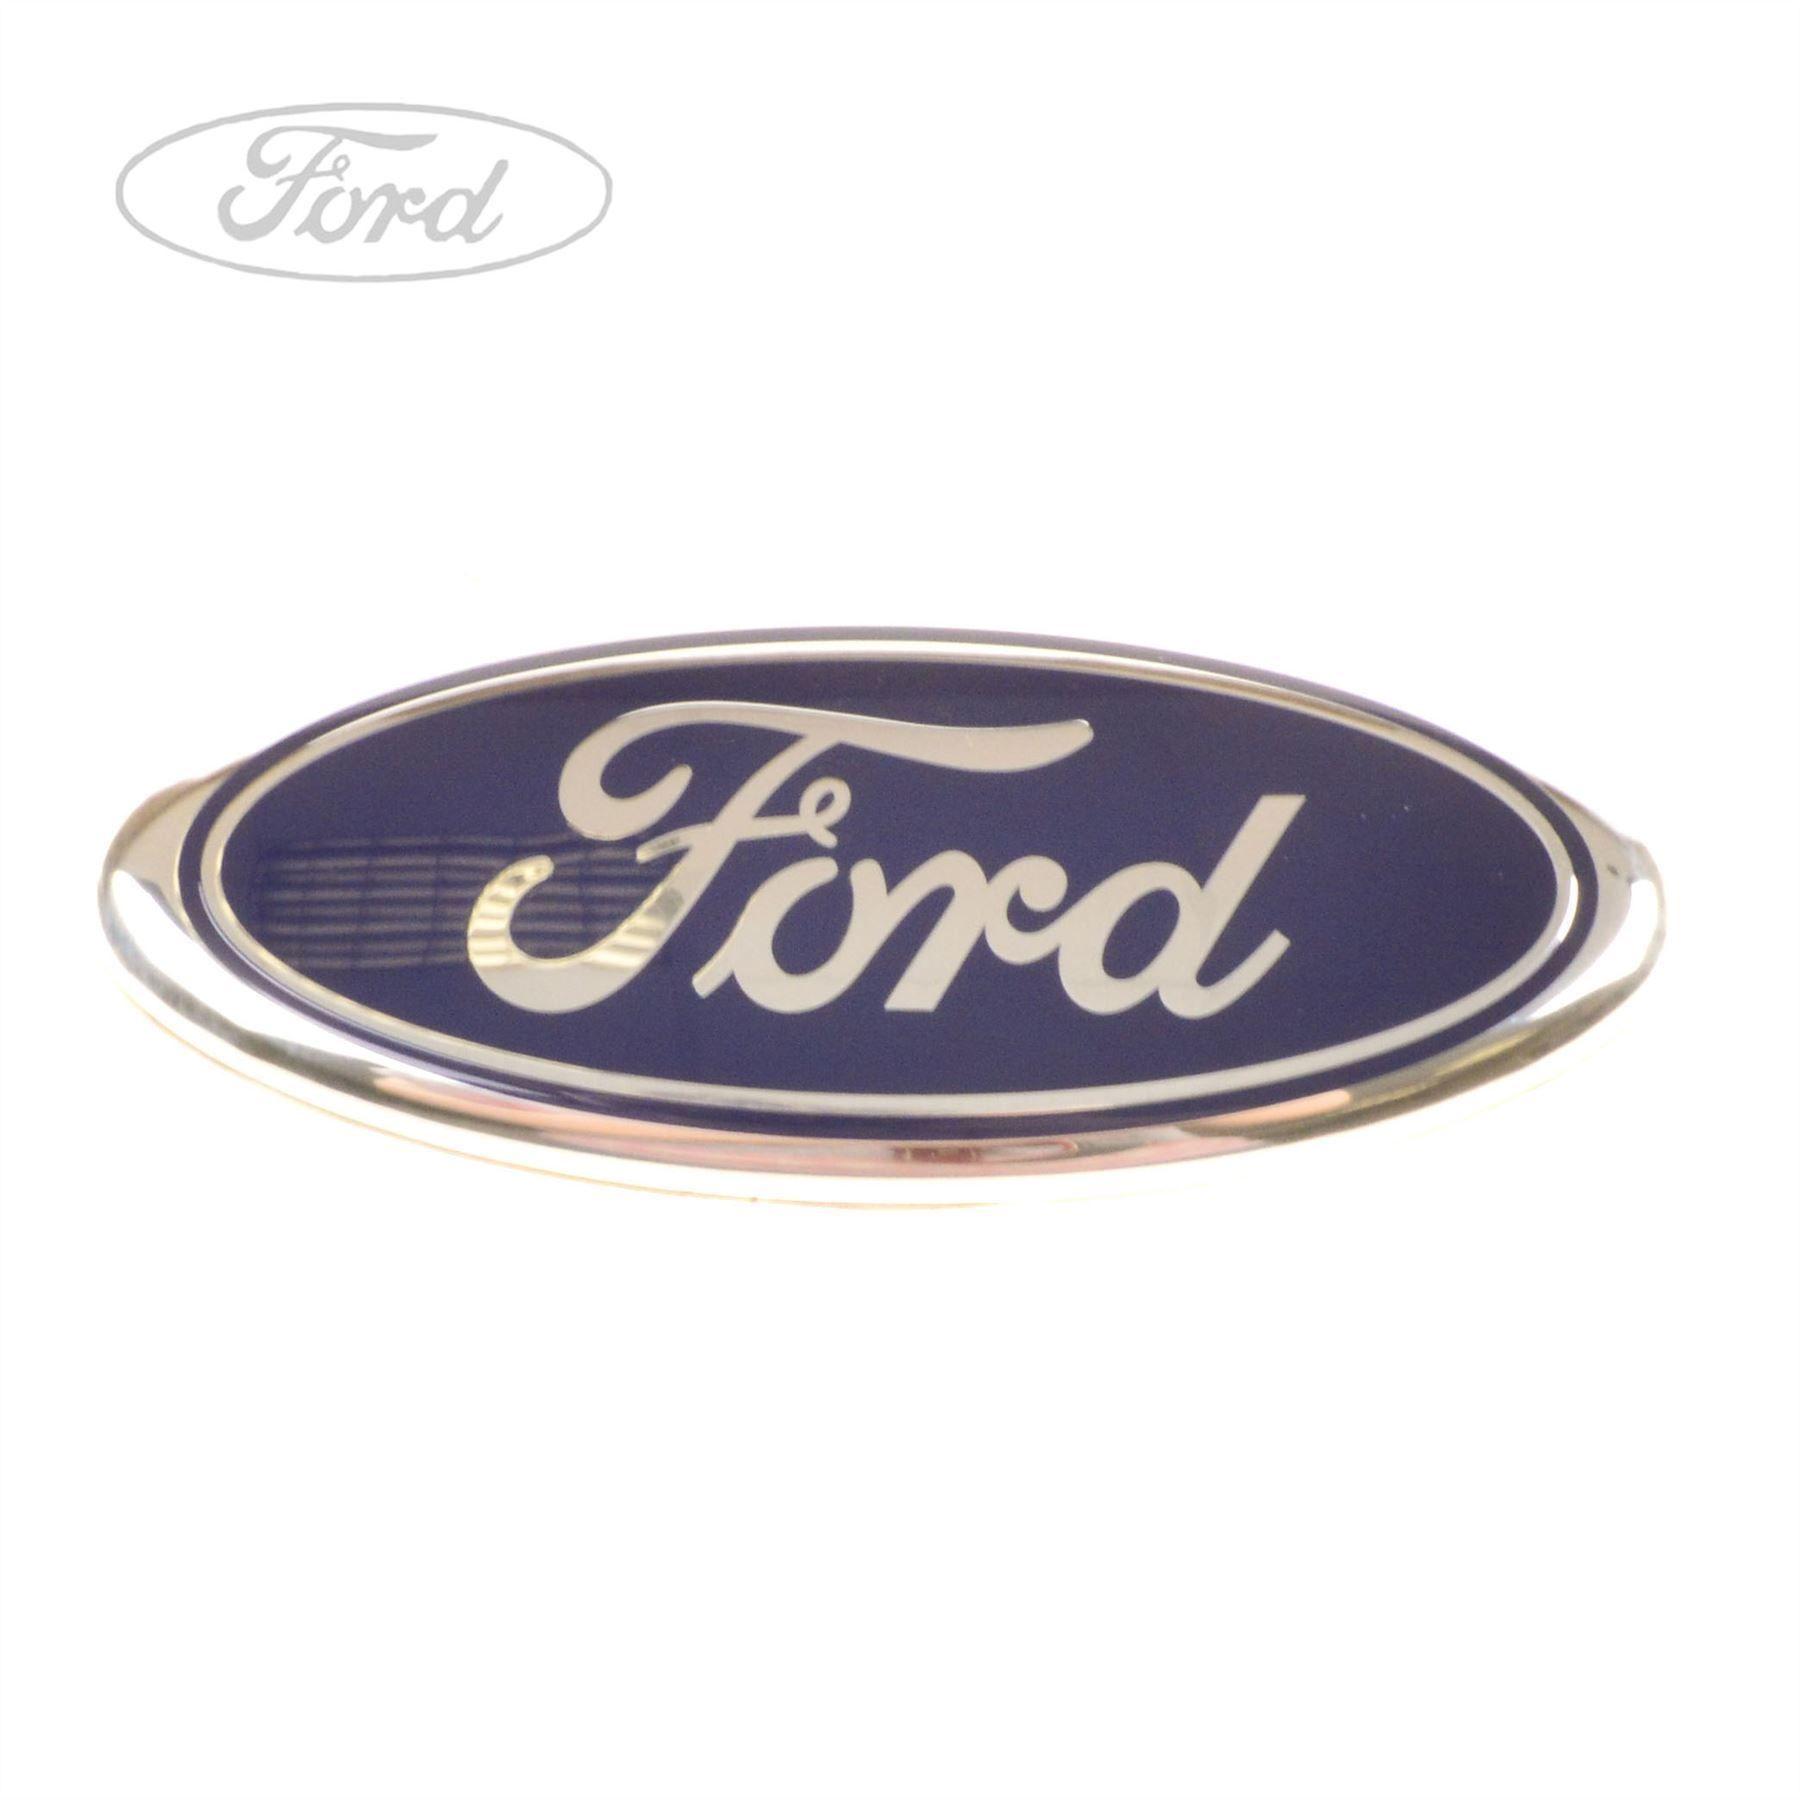 Ford Fusion Logo - Genuine Ford Fusion Radiator Grille Emblem Badge 1207555